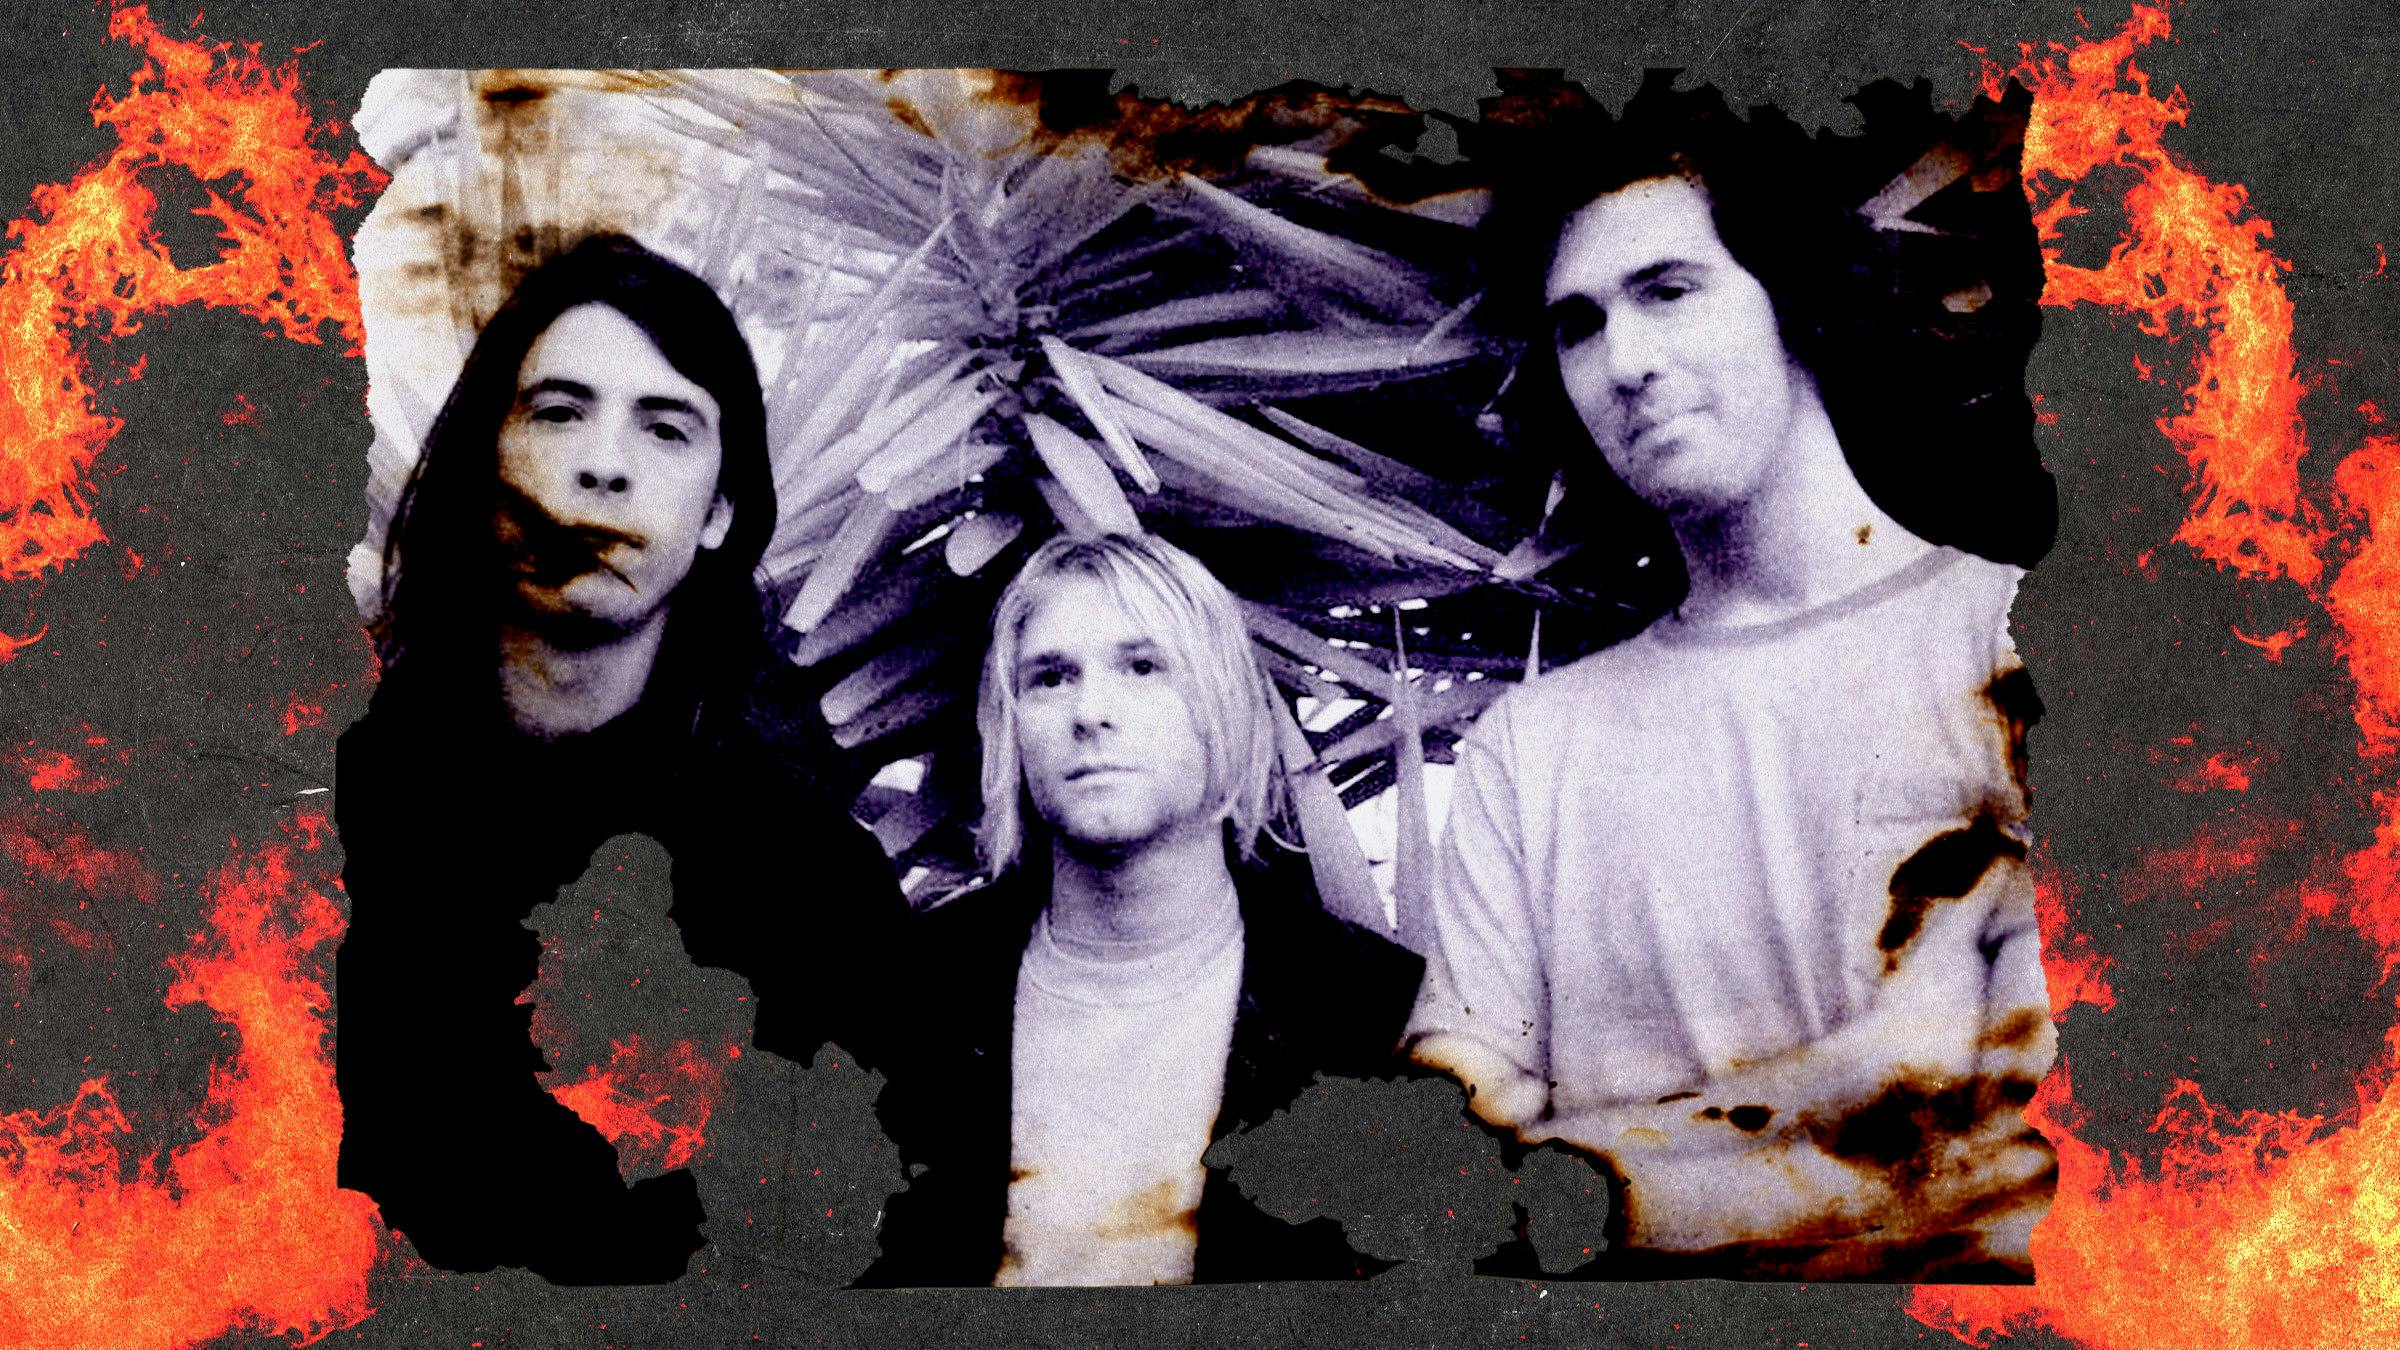 Original Recordings By Nirvana, Nine Inch Nails, Guns N' Roses Lost In Studio Fire